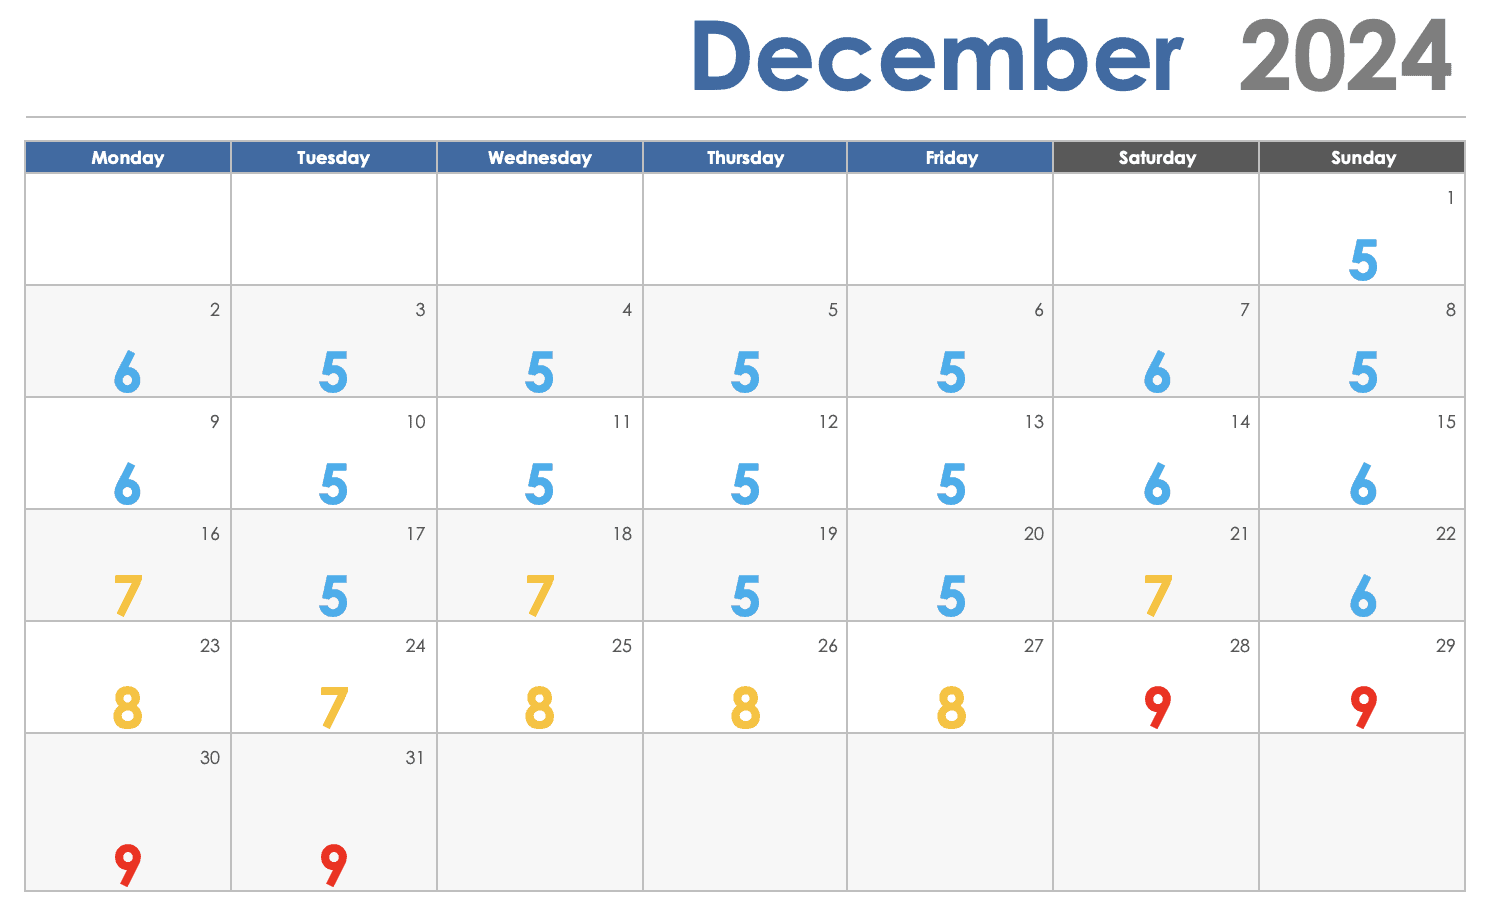 December Disney Crowd Calendar